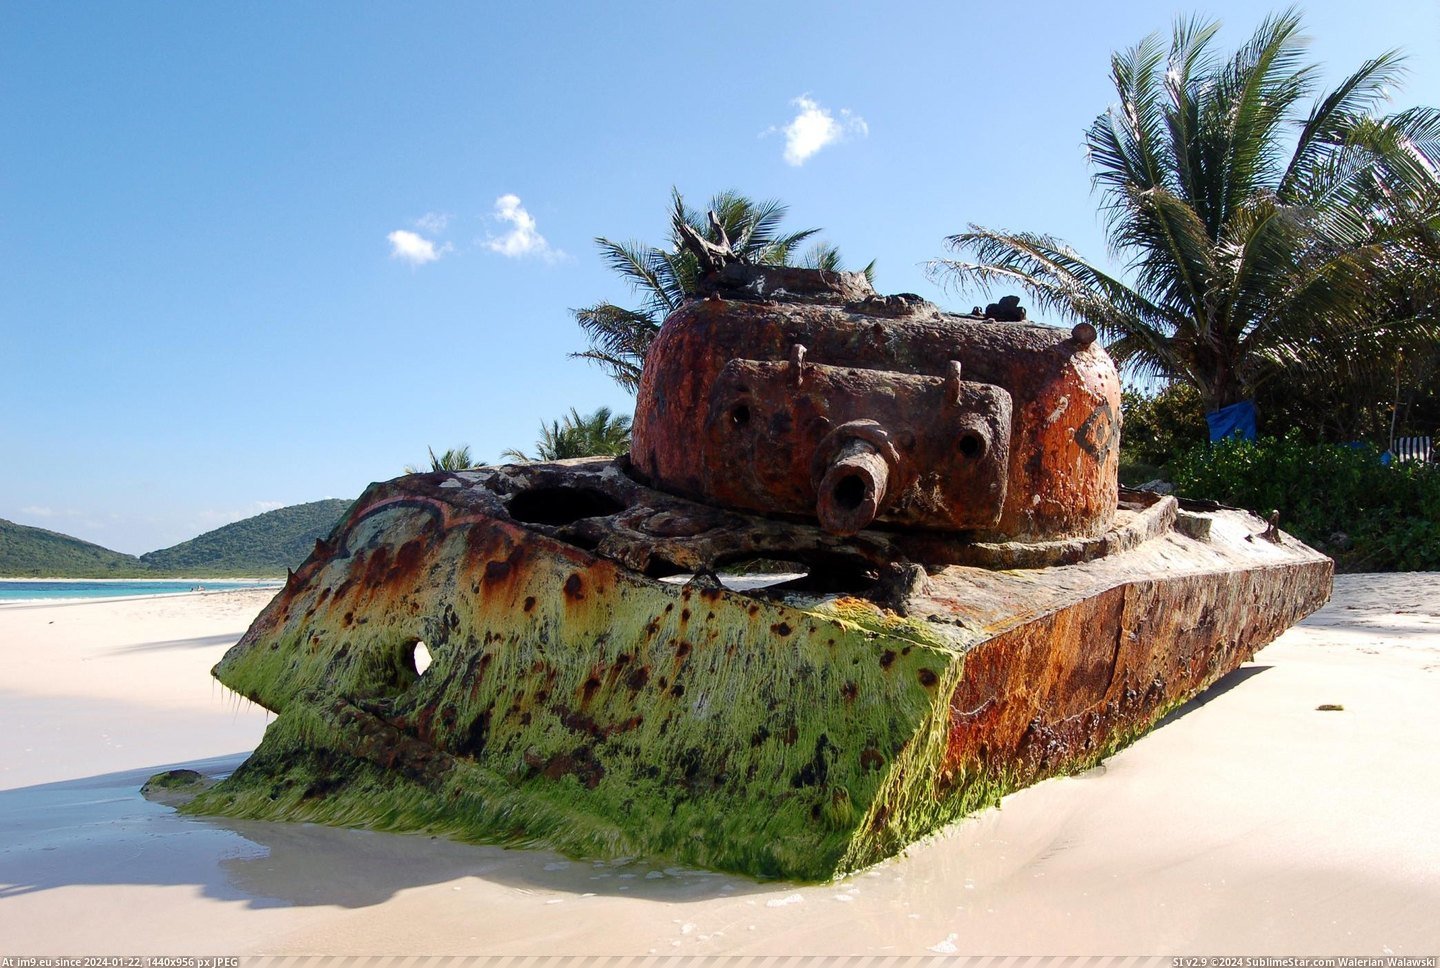 #Beach #Abandoned #Rico #Tank #Puerto [Pics] This abandoned tank on a beach in Puerto Rico Pic. (Obraz z album My r/PICS favs))